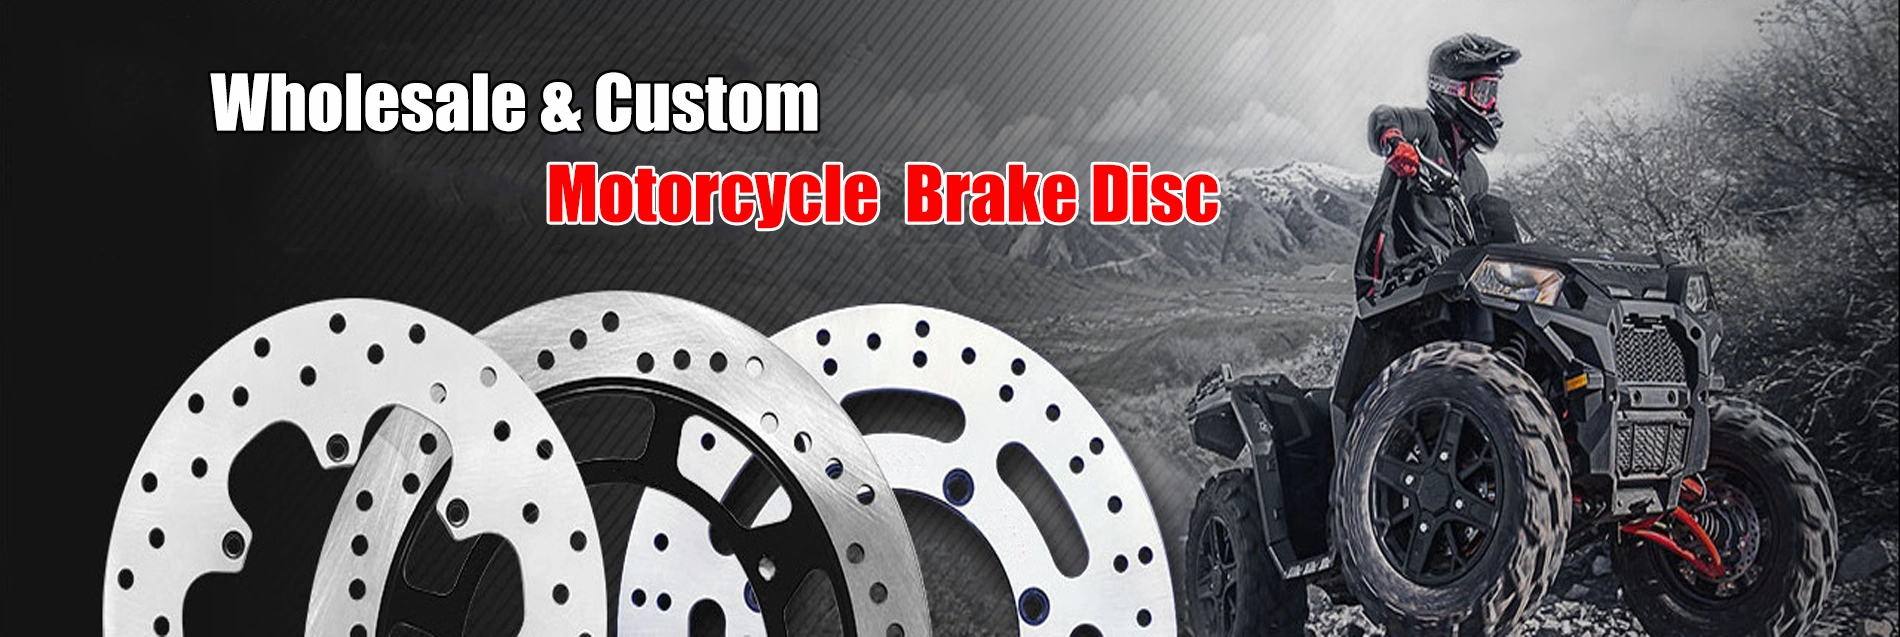 Front floating 330mm motorcycle brake disc for Honda road